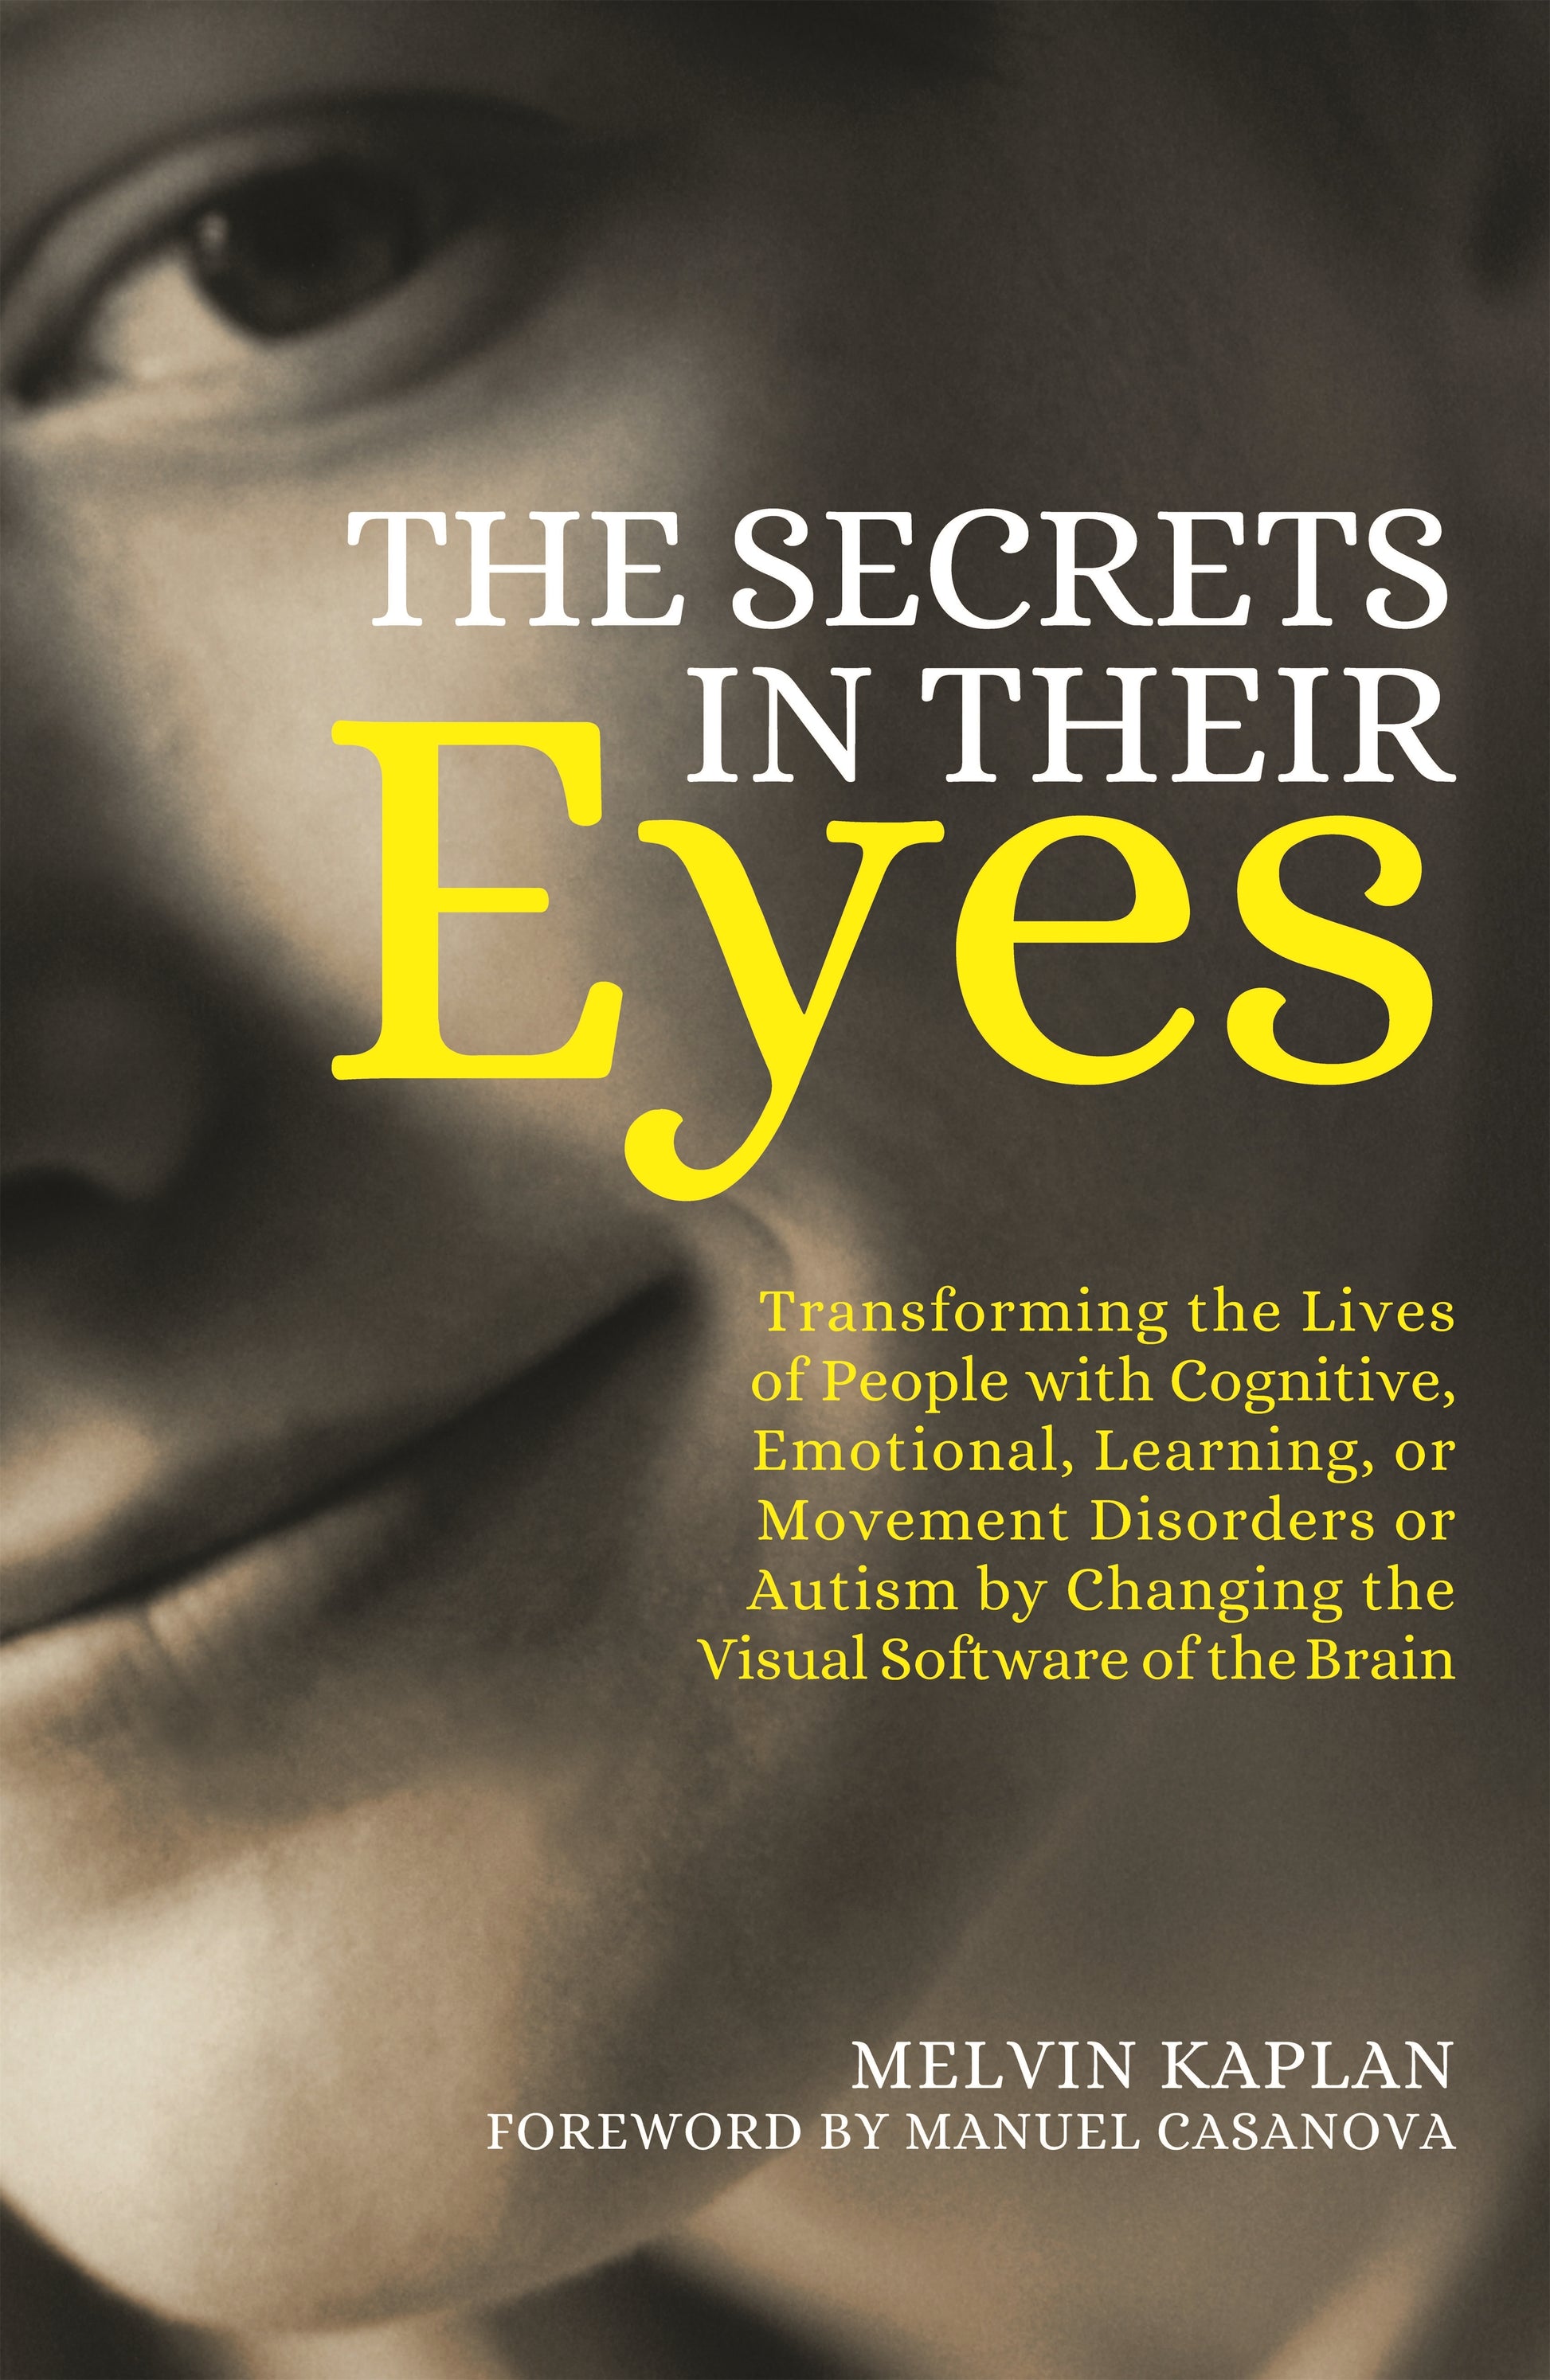 The Secrets in Their Eyes by Melvin Kaplan, Manuel Casanova